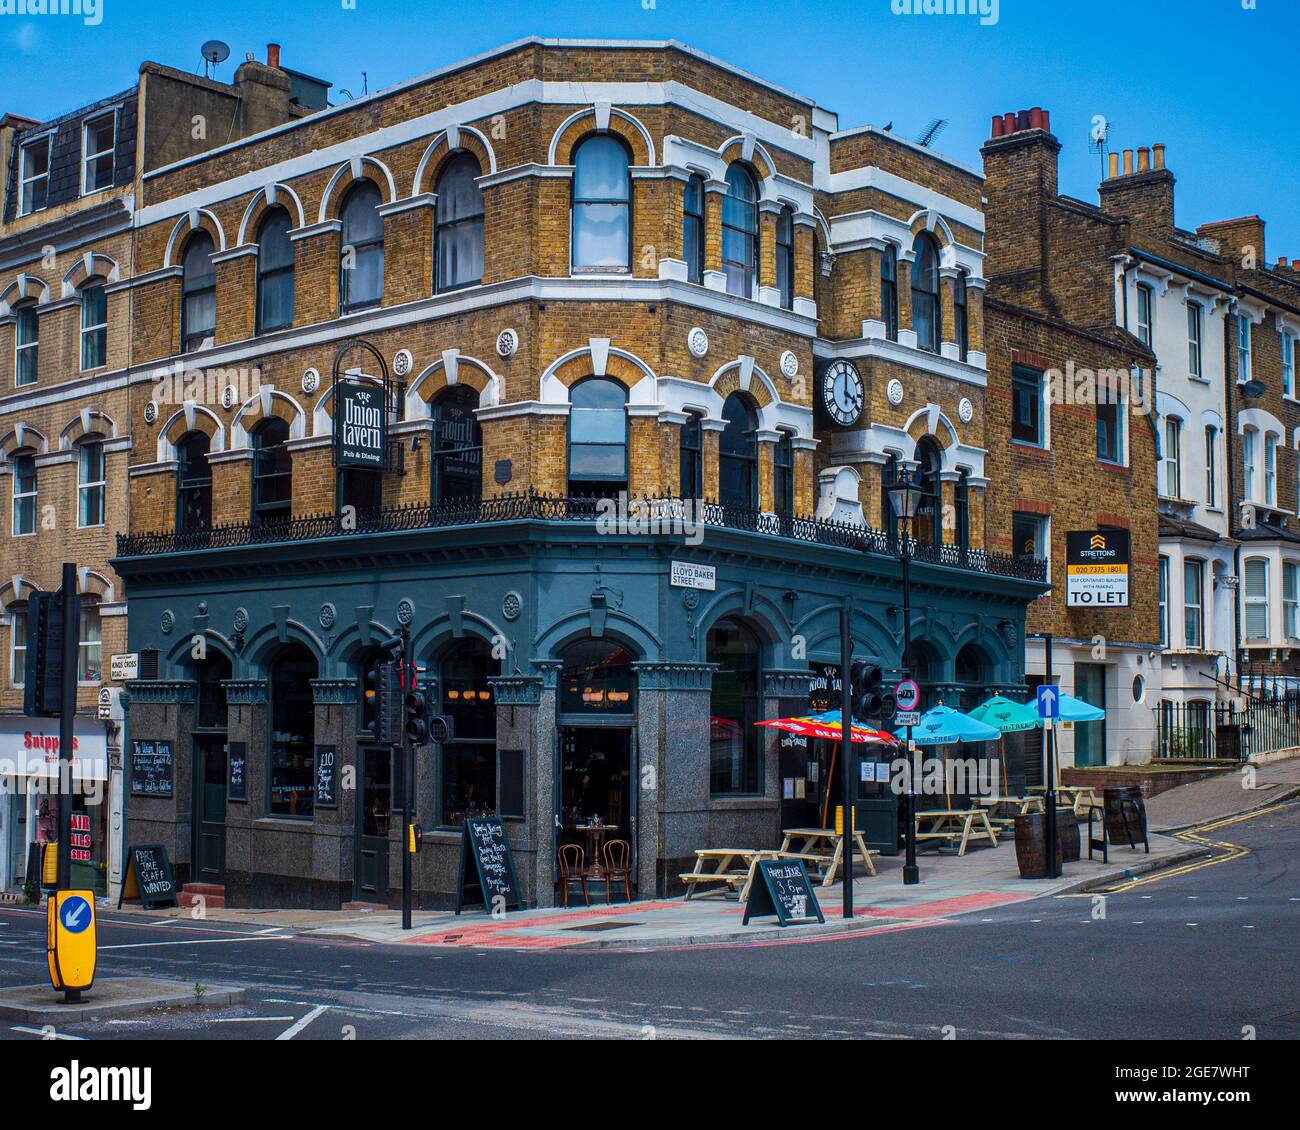 The Union Tavern Pub London - The Union Tavern Pub & Restaurant on Kings Cross Road, Clerkenwell Central London. Stock Photo